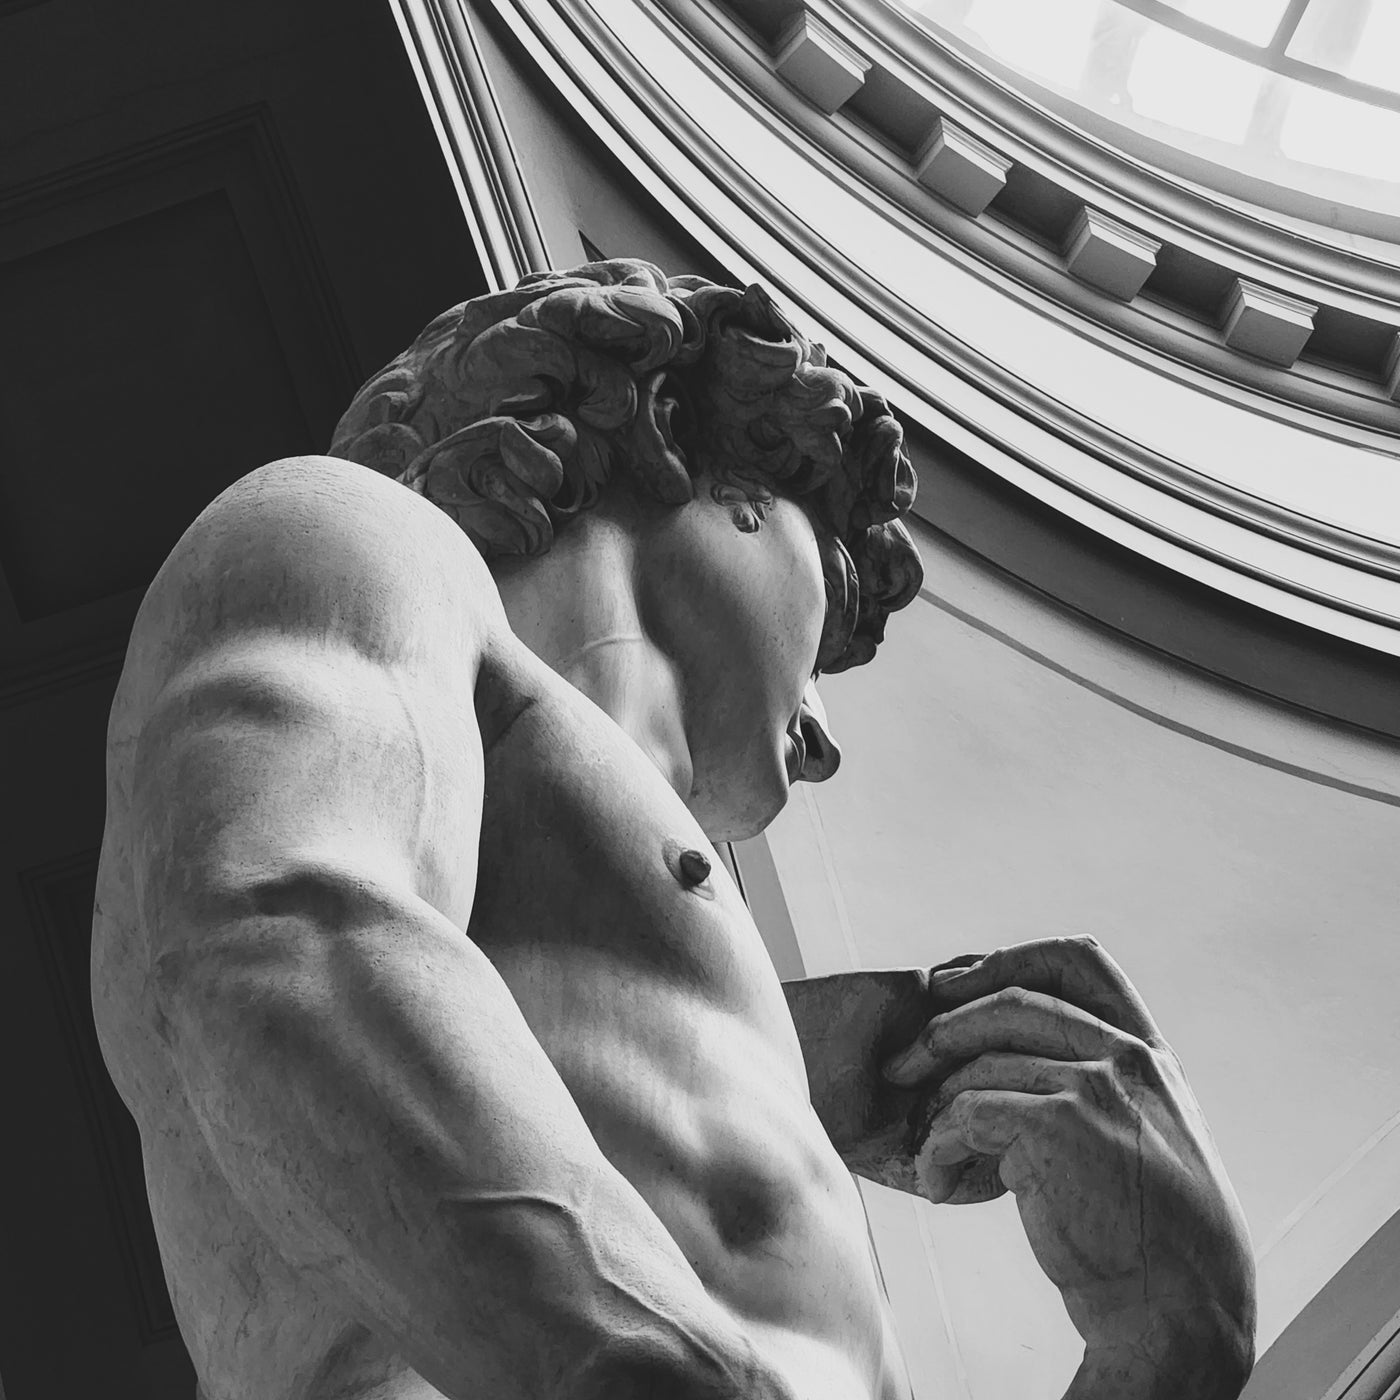 Michelangelo's "David" sculpture in Florence, Italy